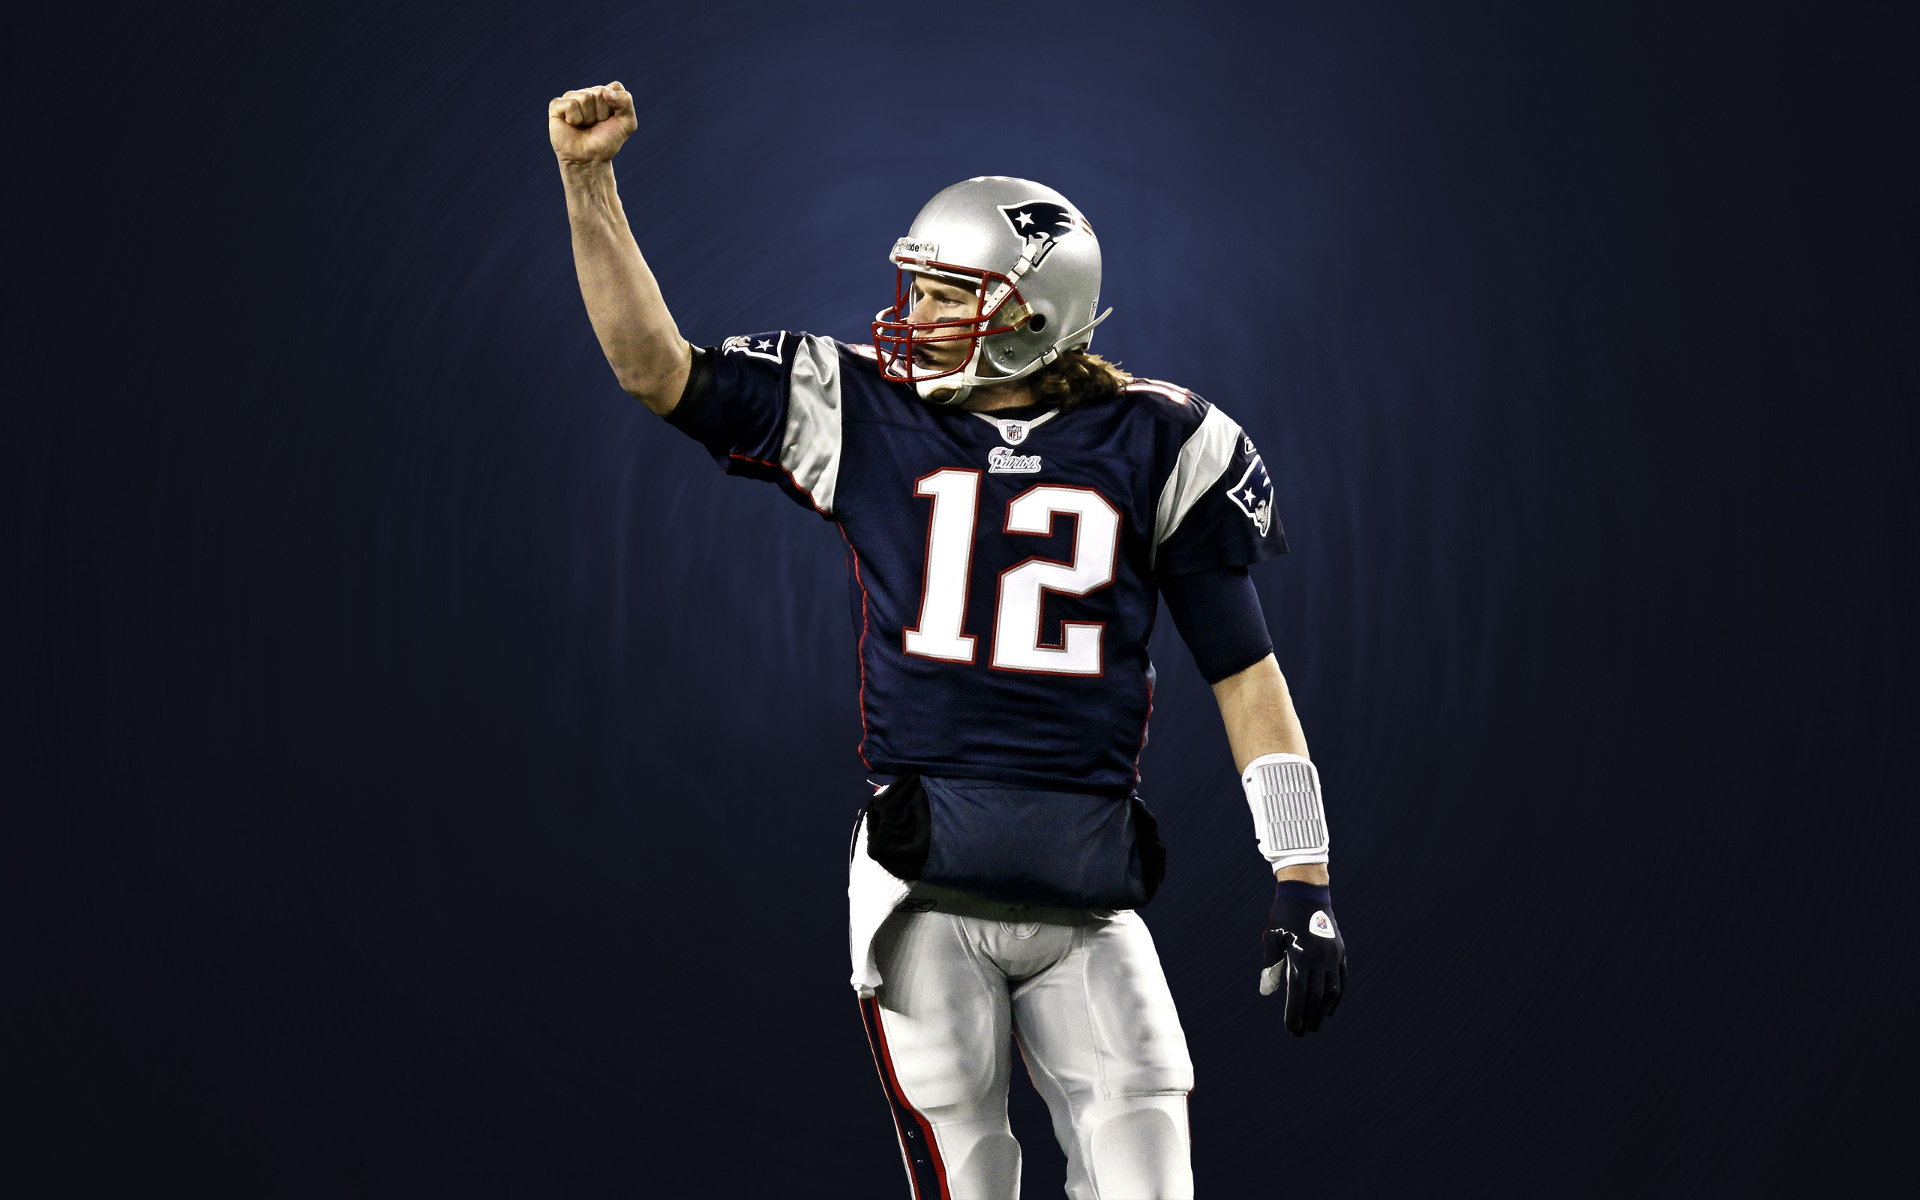 Sports Tom Brady HD Wallpaper